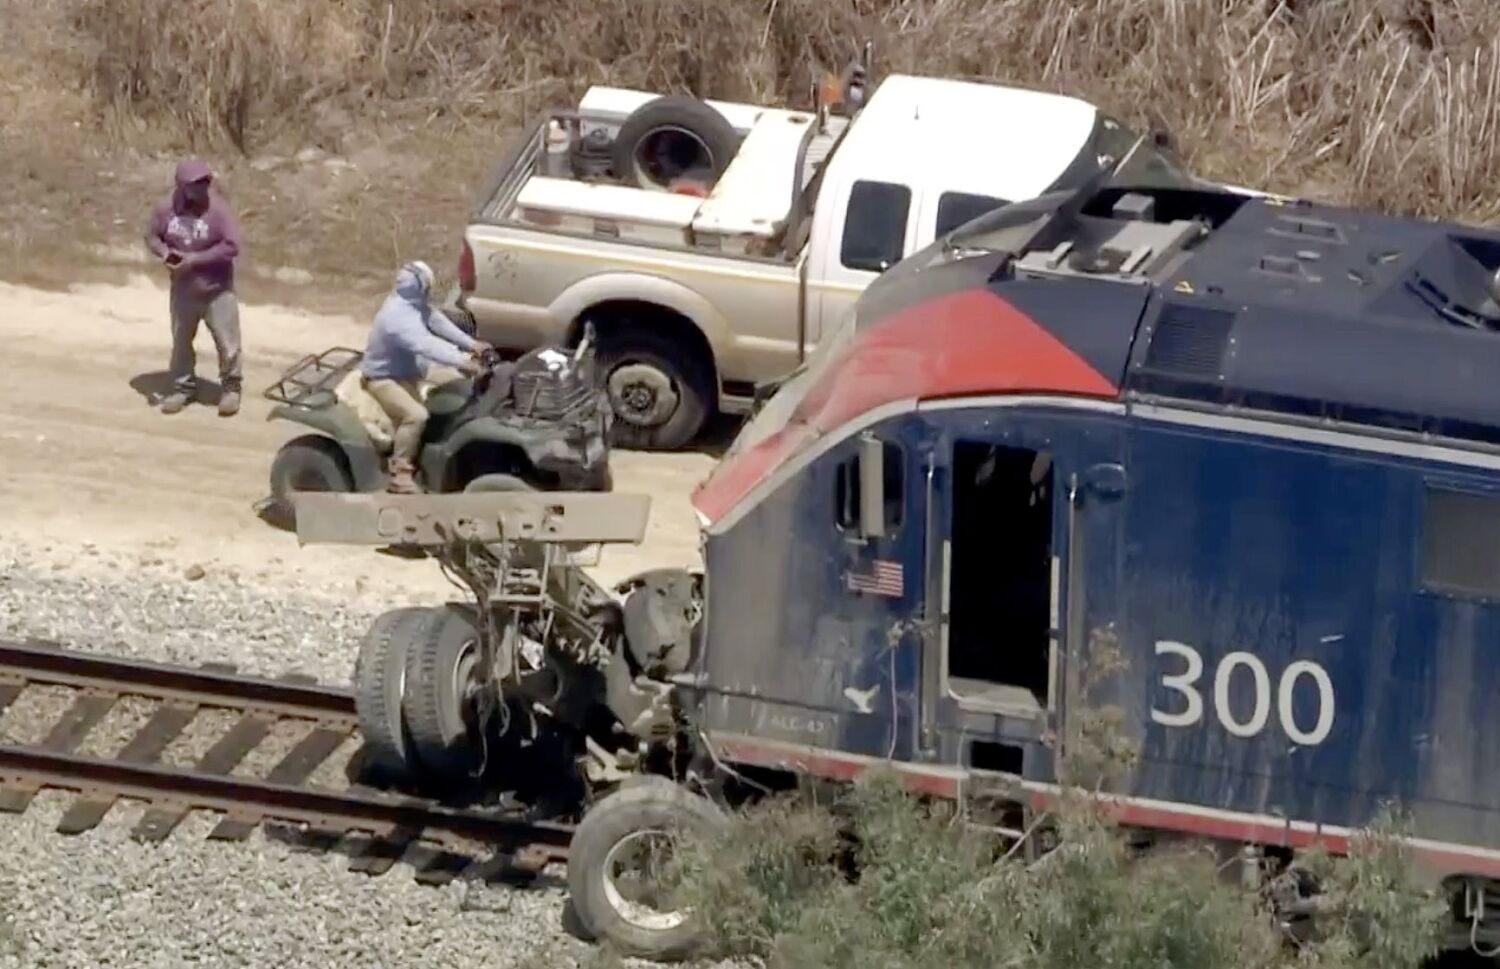 Amtrak train derails after ramming truck in Moorpark, 15 taken to hospital